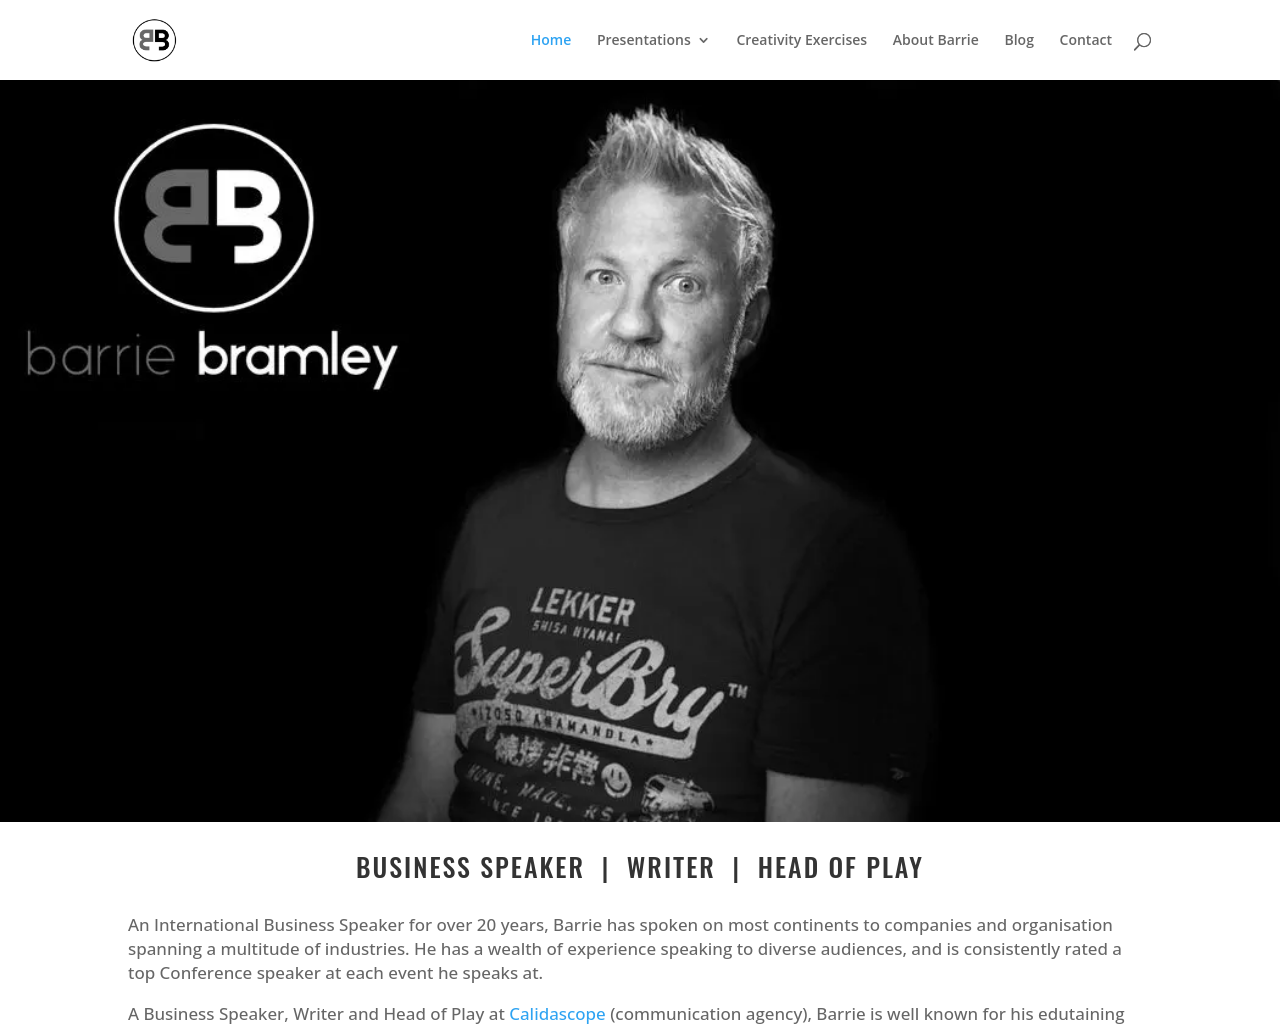 barriebramley.com